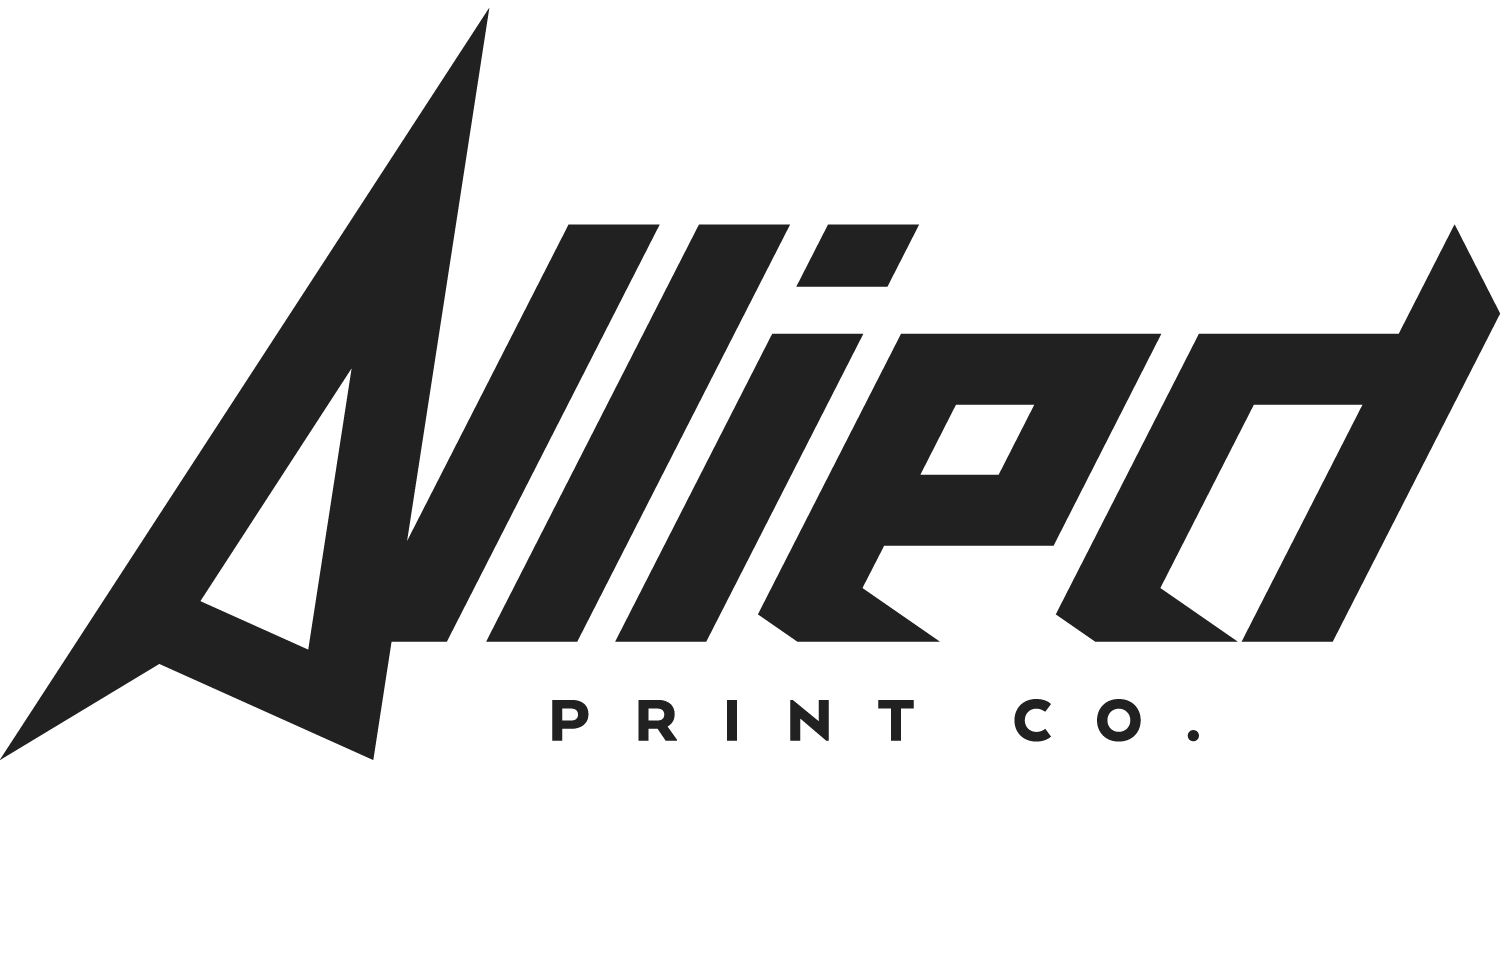 Print Co.